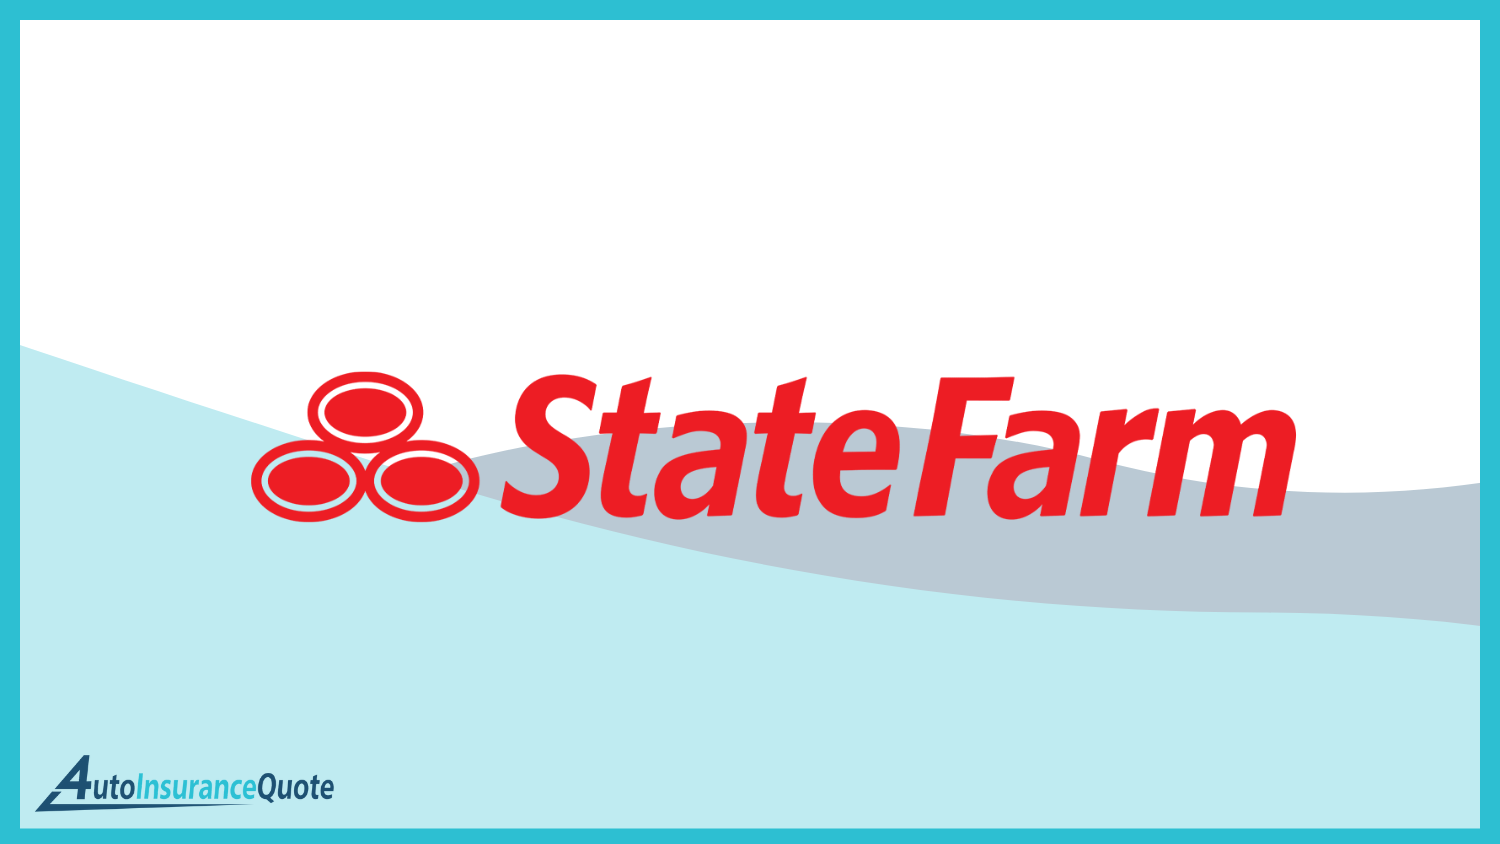 State Farm: Best Auto Insurance Companies